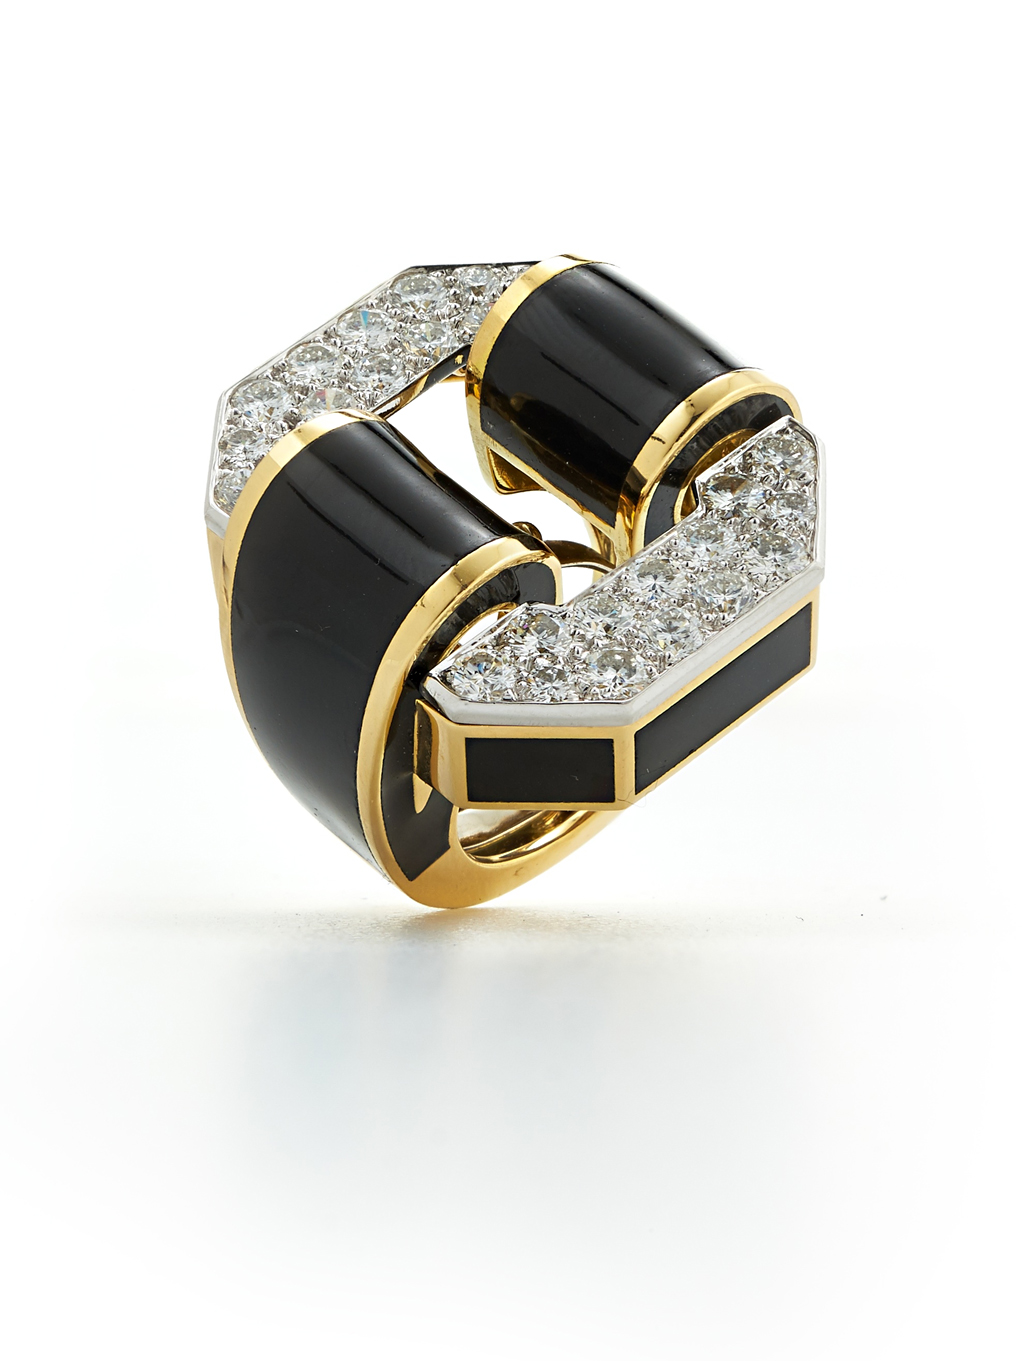 David Webb Buckle Ring. Black enamel, pavé diamonds, platinum and gold. $27,000.